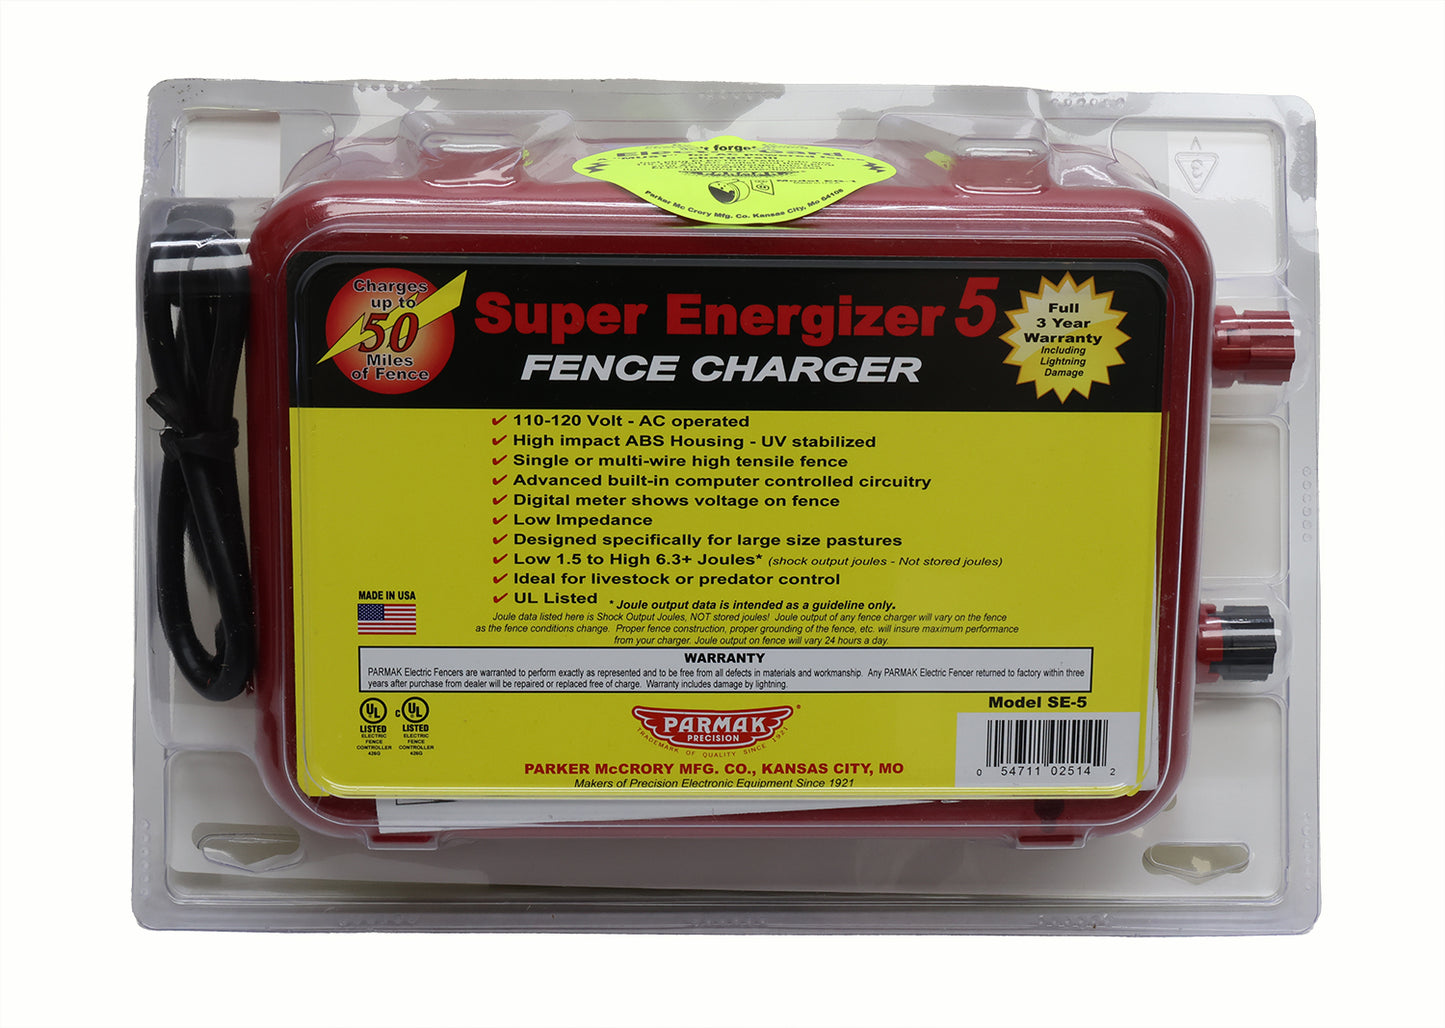 Parmak Super Energizer 5 Fence Charger - 102540